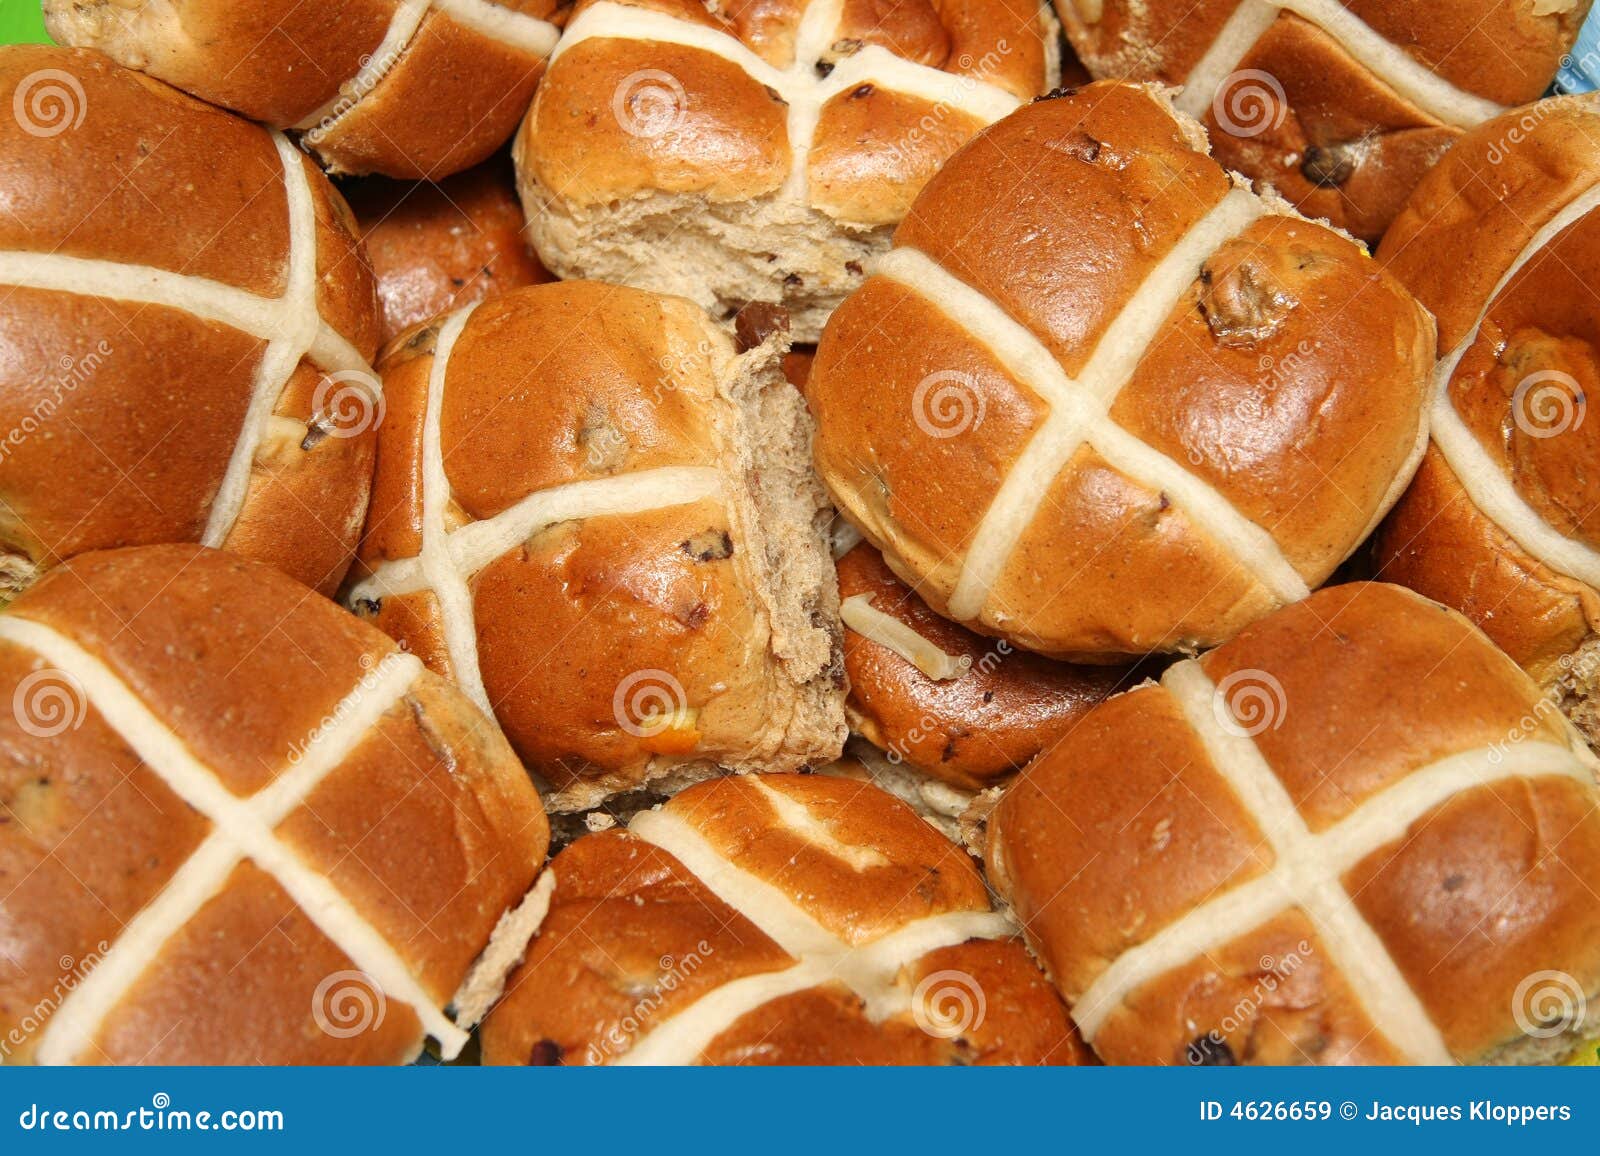 free clipart hot cross buns - photo #43